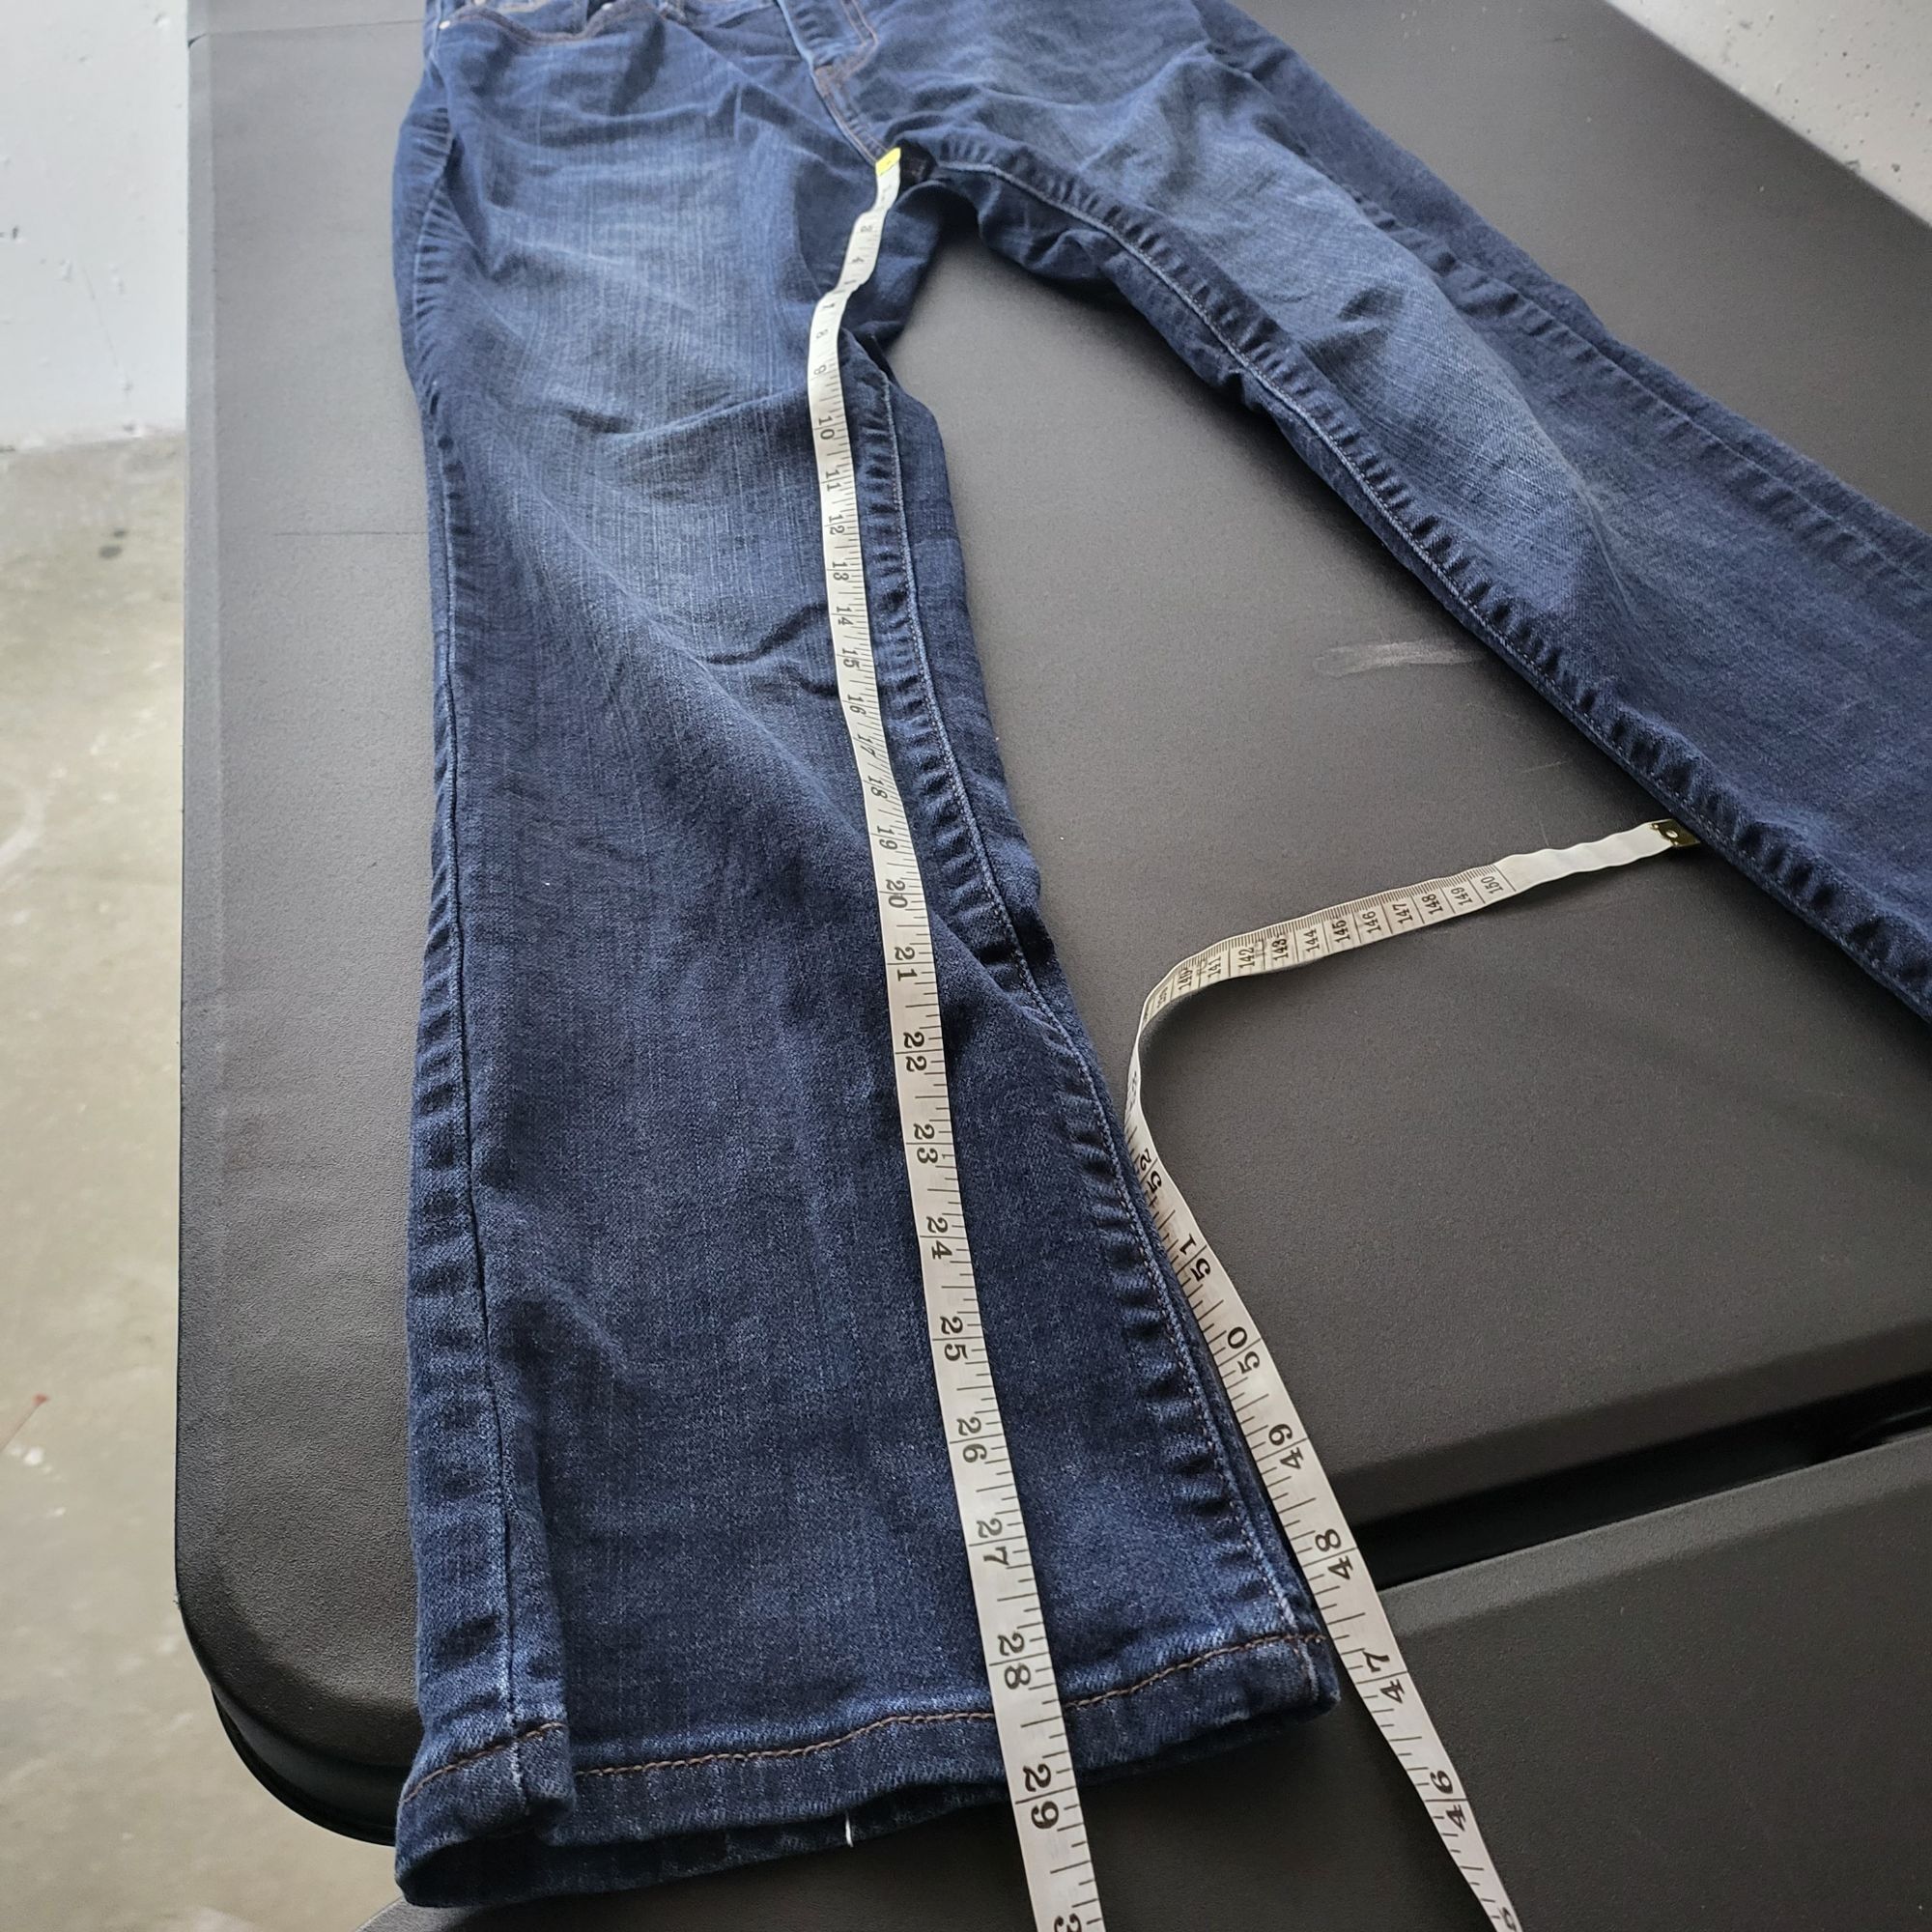 Levi's Levi's 505 Straight Leg Denim Blue Jeans Women's Size 27/30 Size 27" / US 4 / IT 40 - 10 Thumbnail